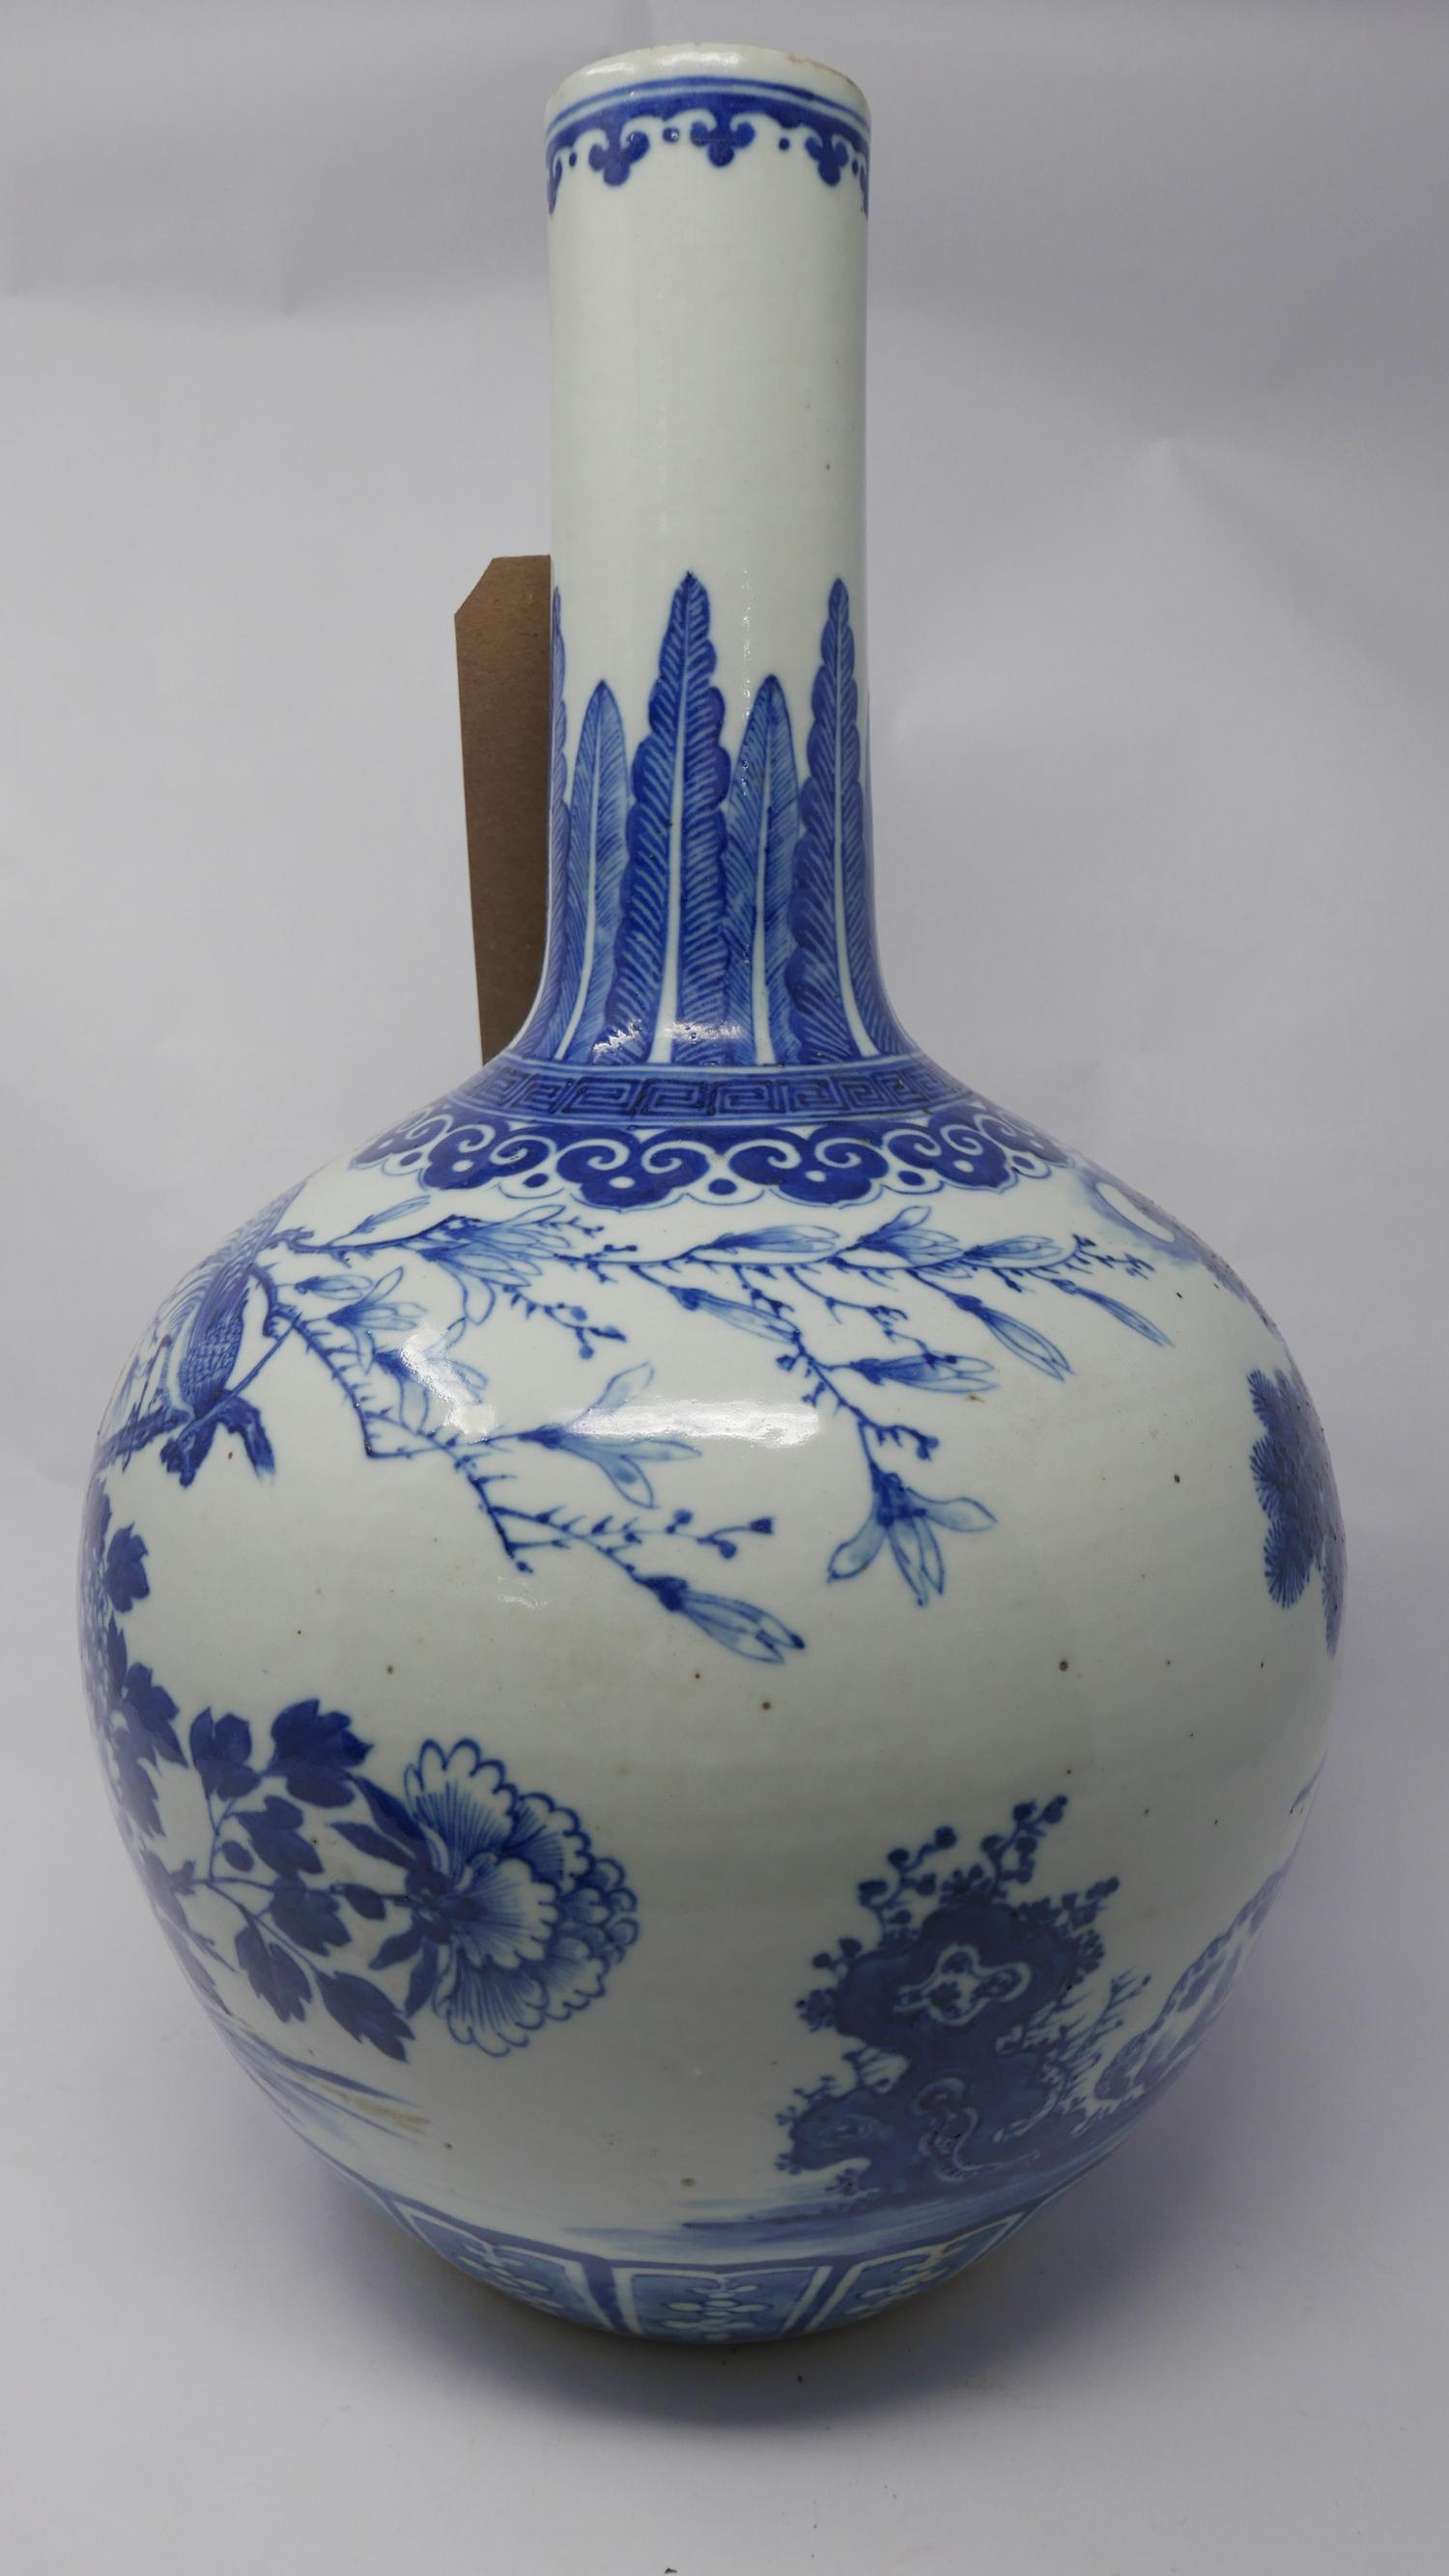 A 19th century Chinese blue & white porcelain vase, decorated with birds & goats amongst foliage, - Image 2 of 4